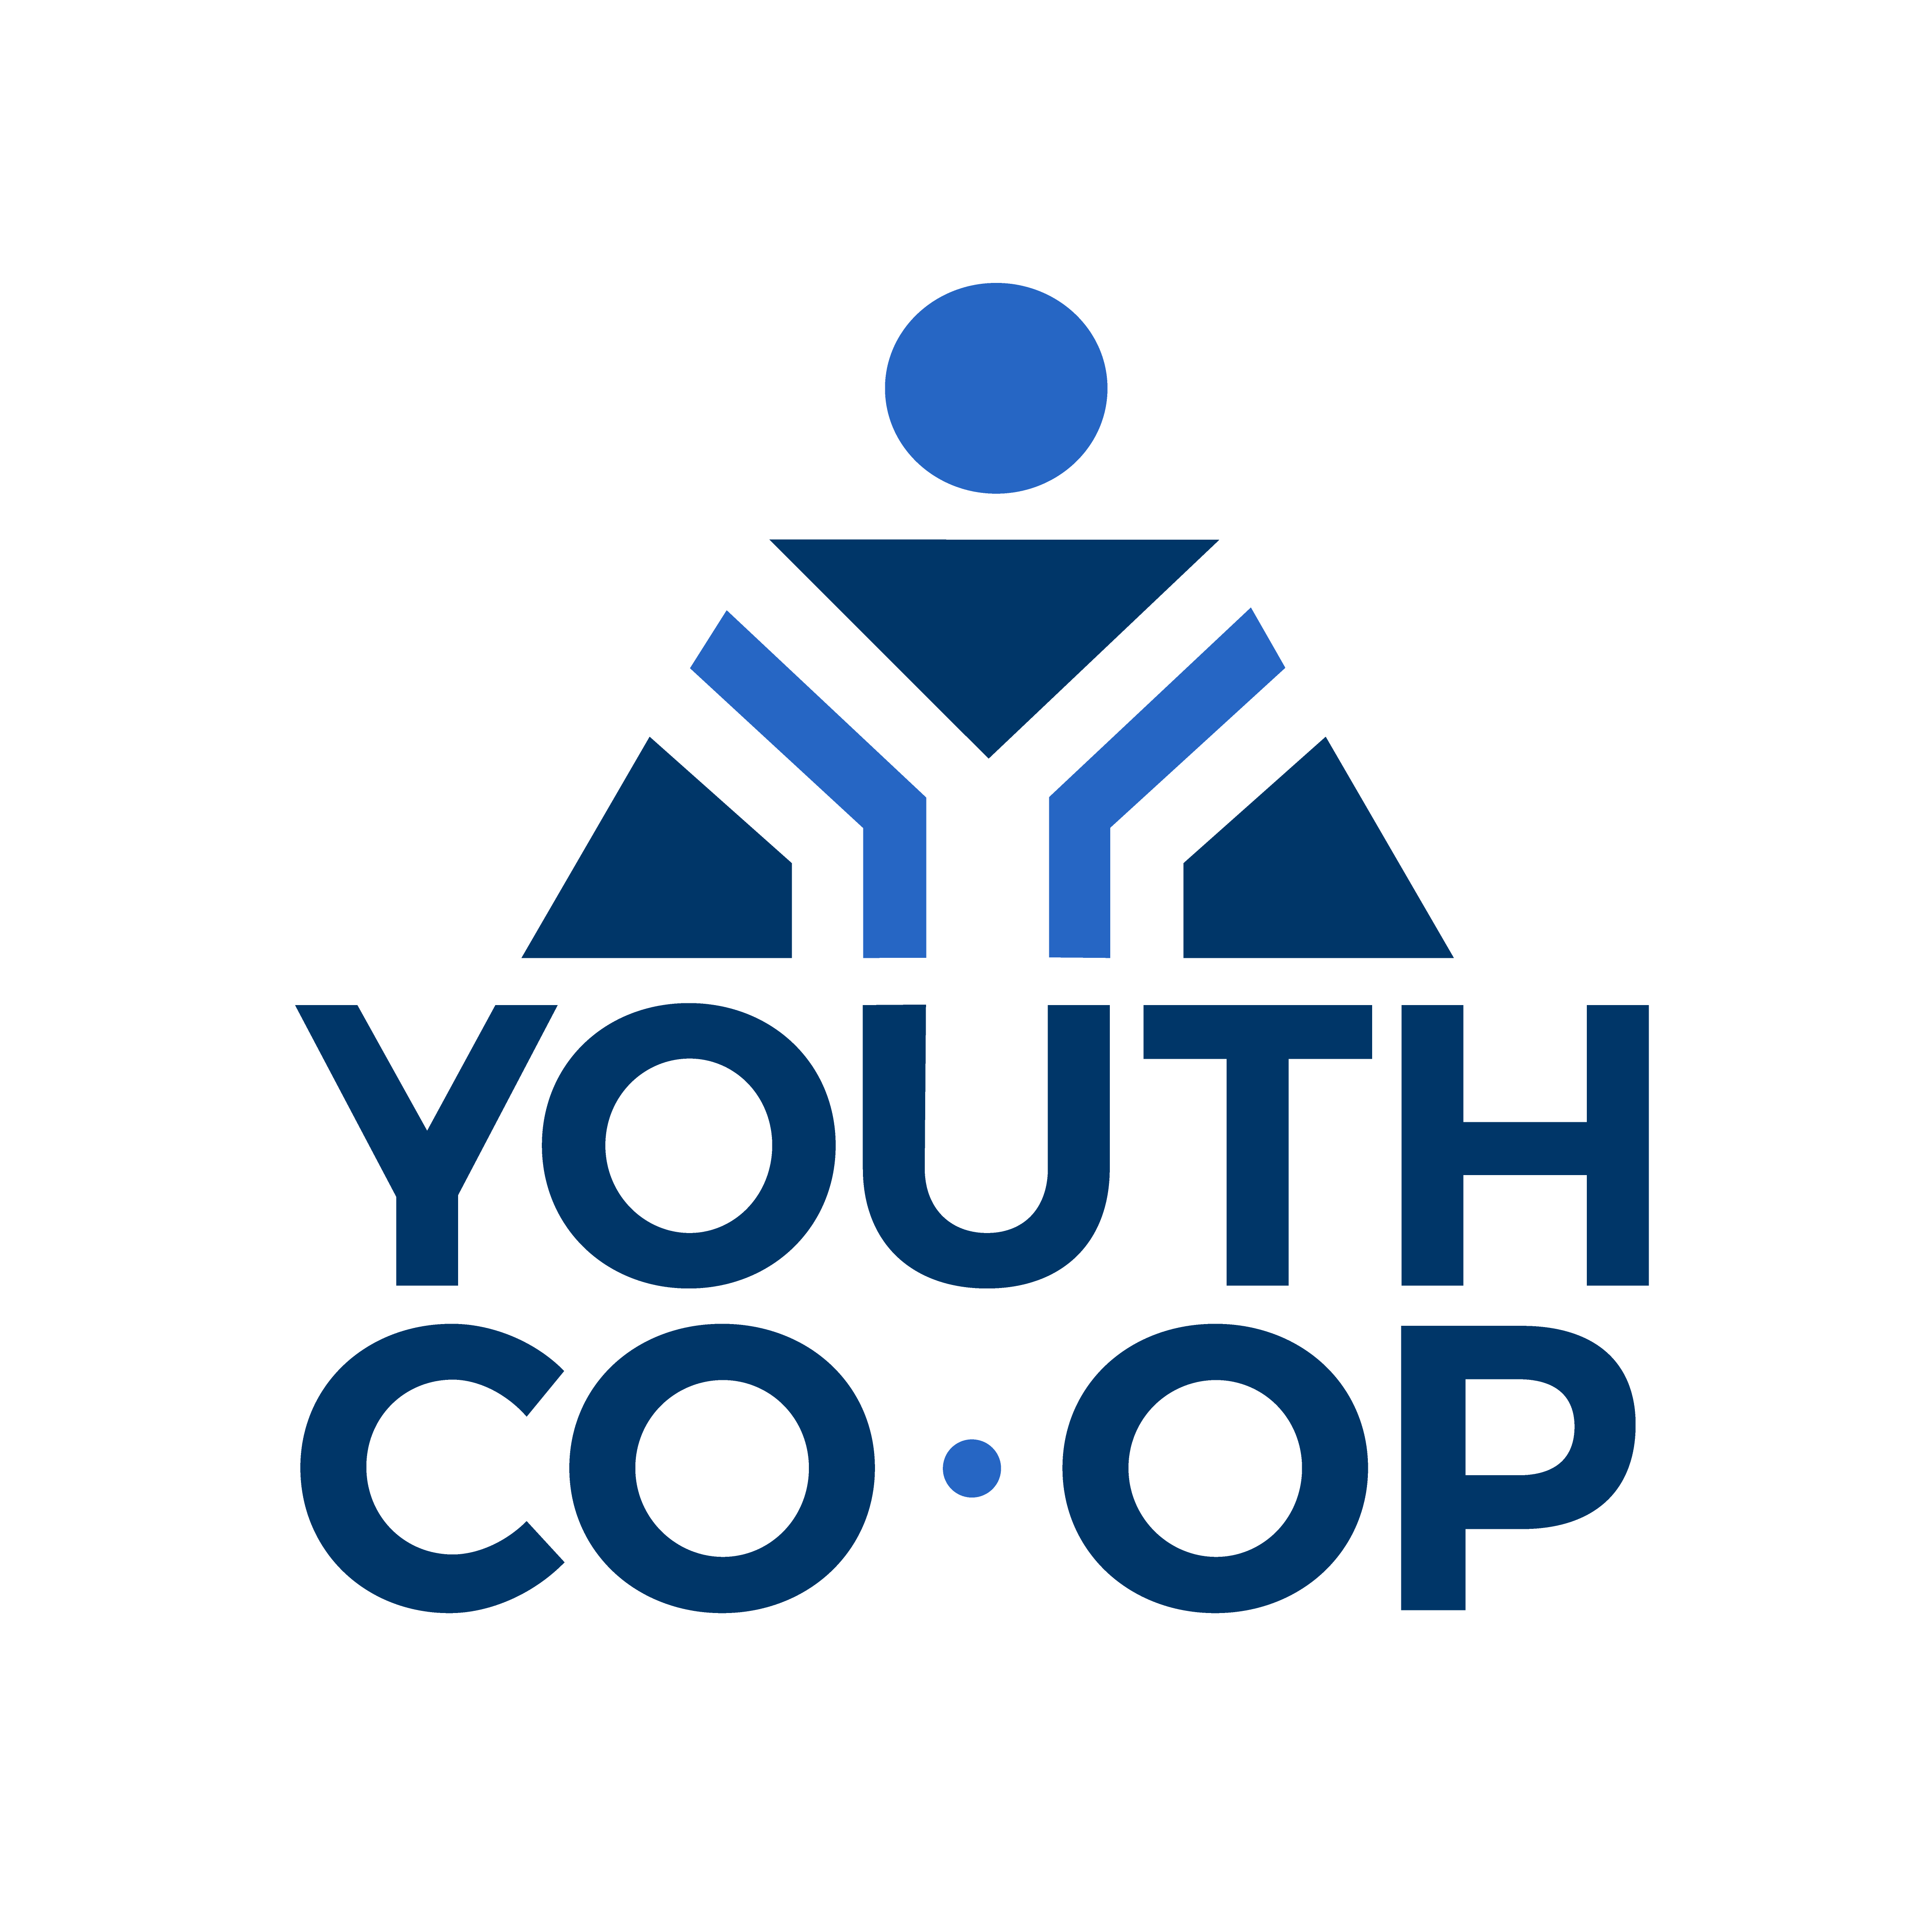 Youth Co-Op Company Logo